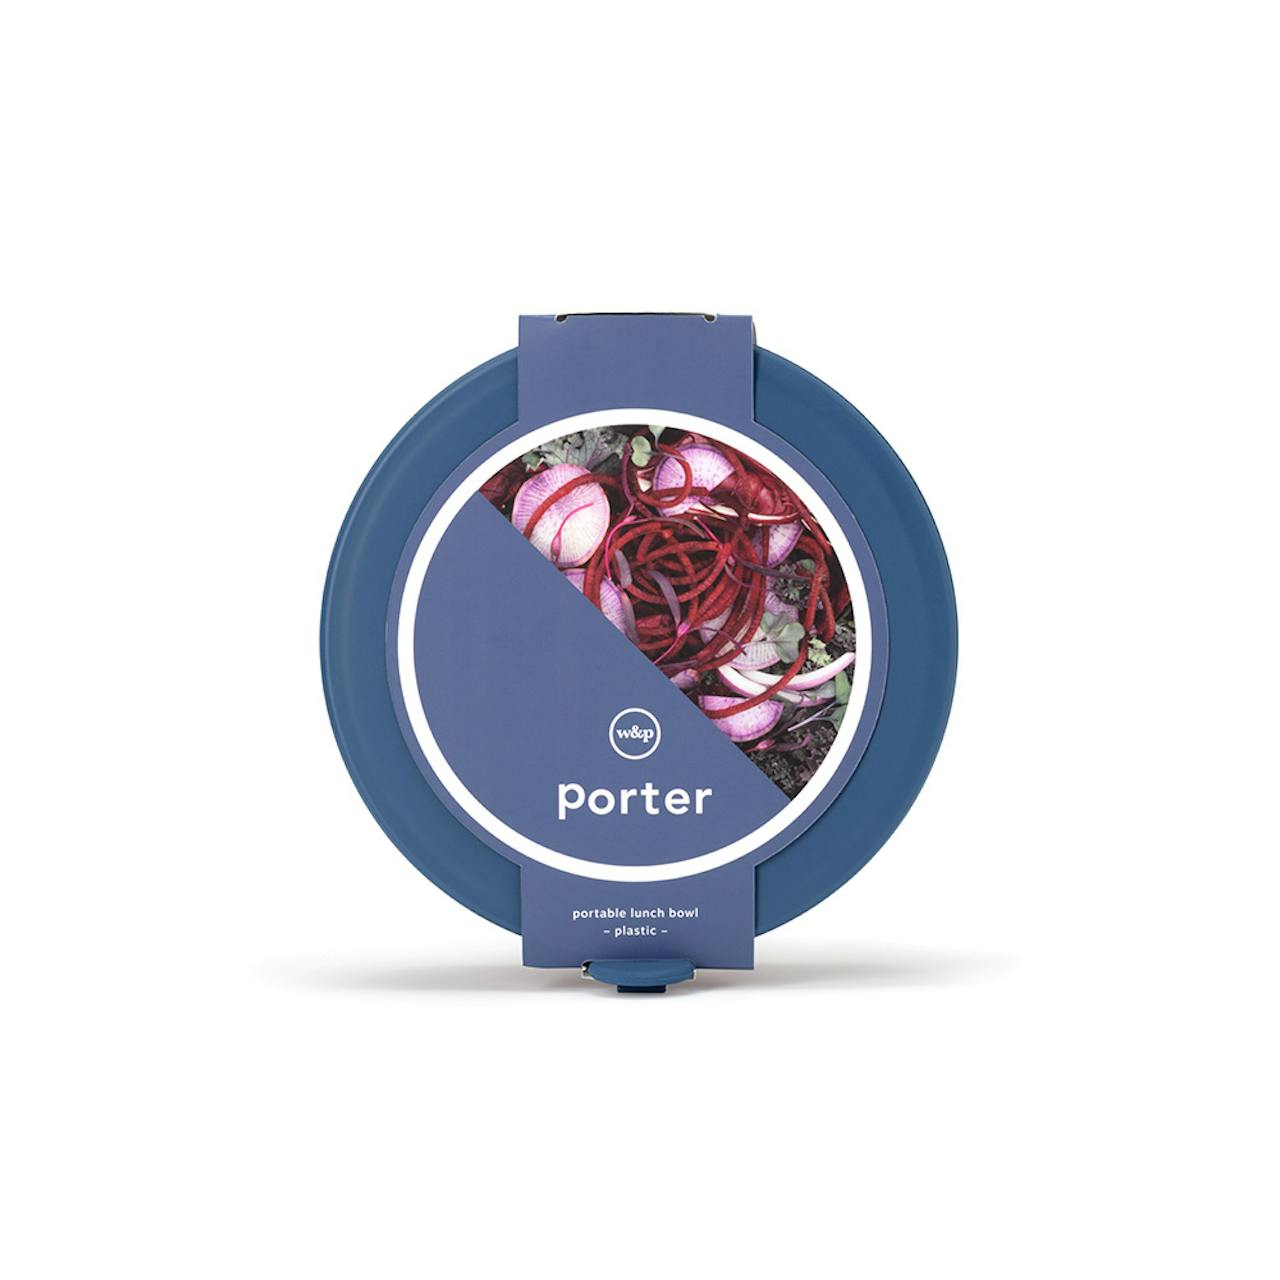 W&P Design Porter Bowl - Plastic